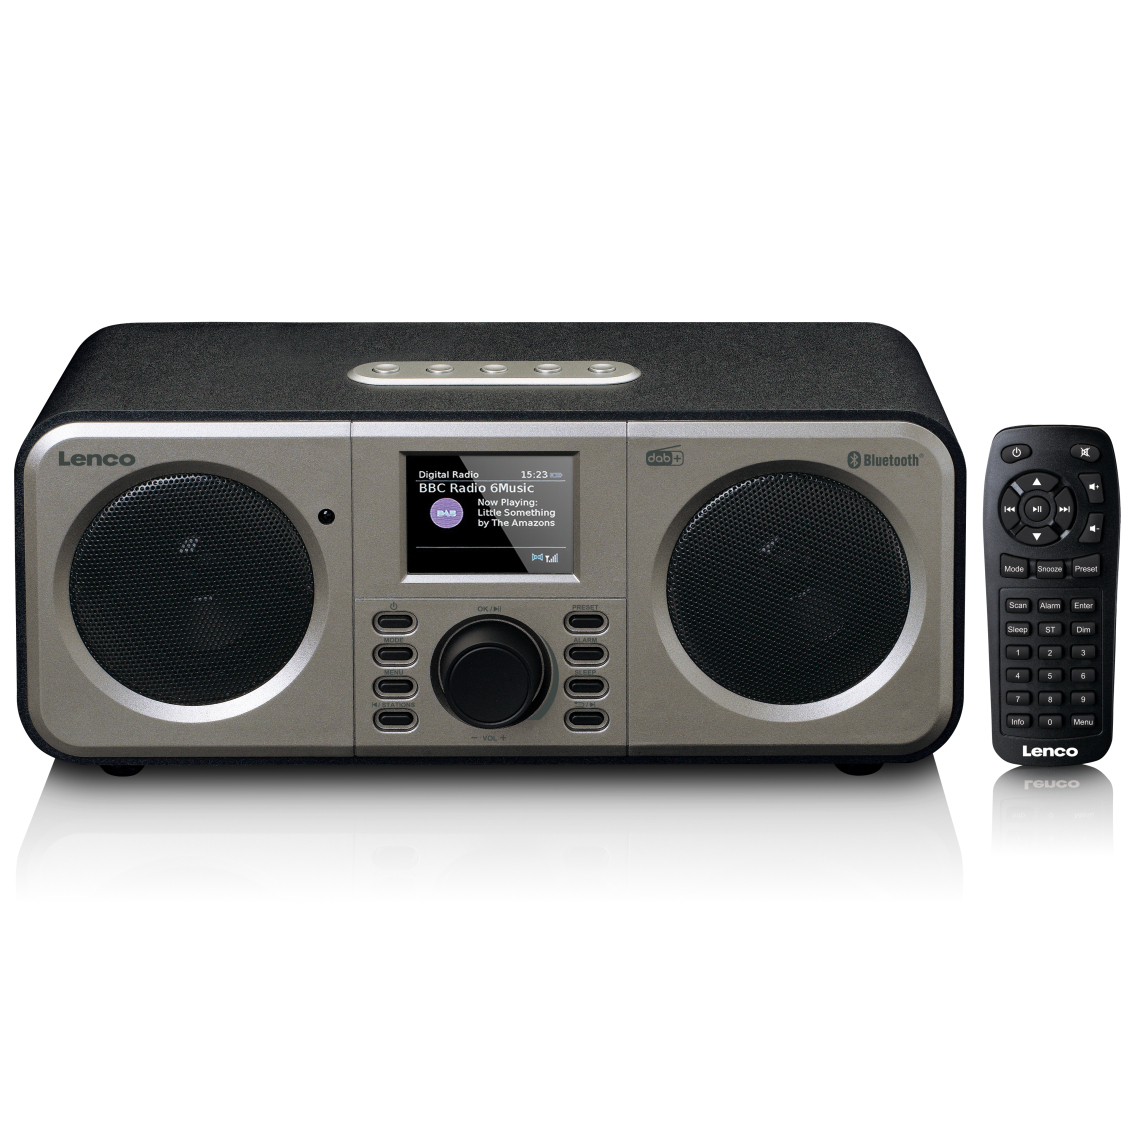 Lenco - Radio DAB+/FM stéréo avec Bluetooth DAR-030BK Noir-Argent - Radio